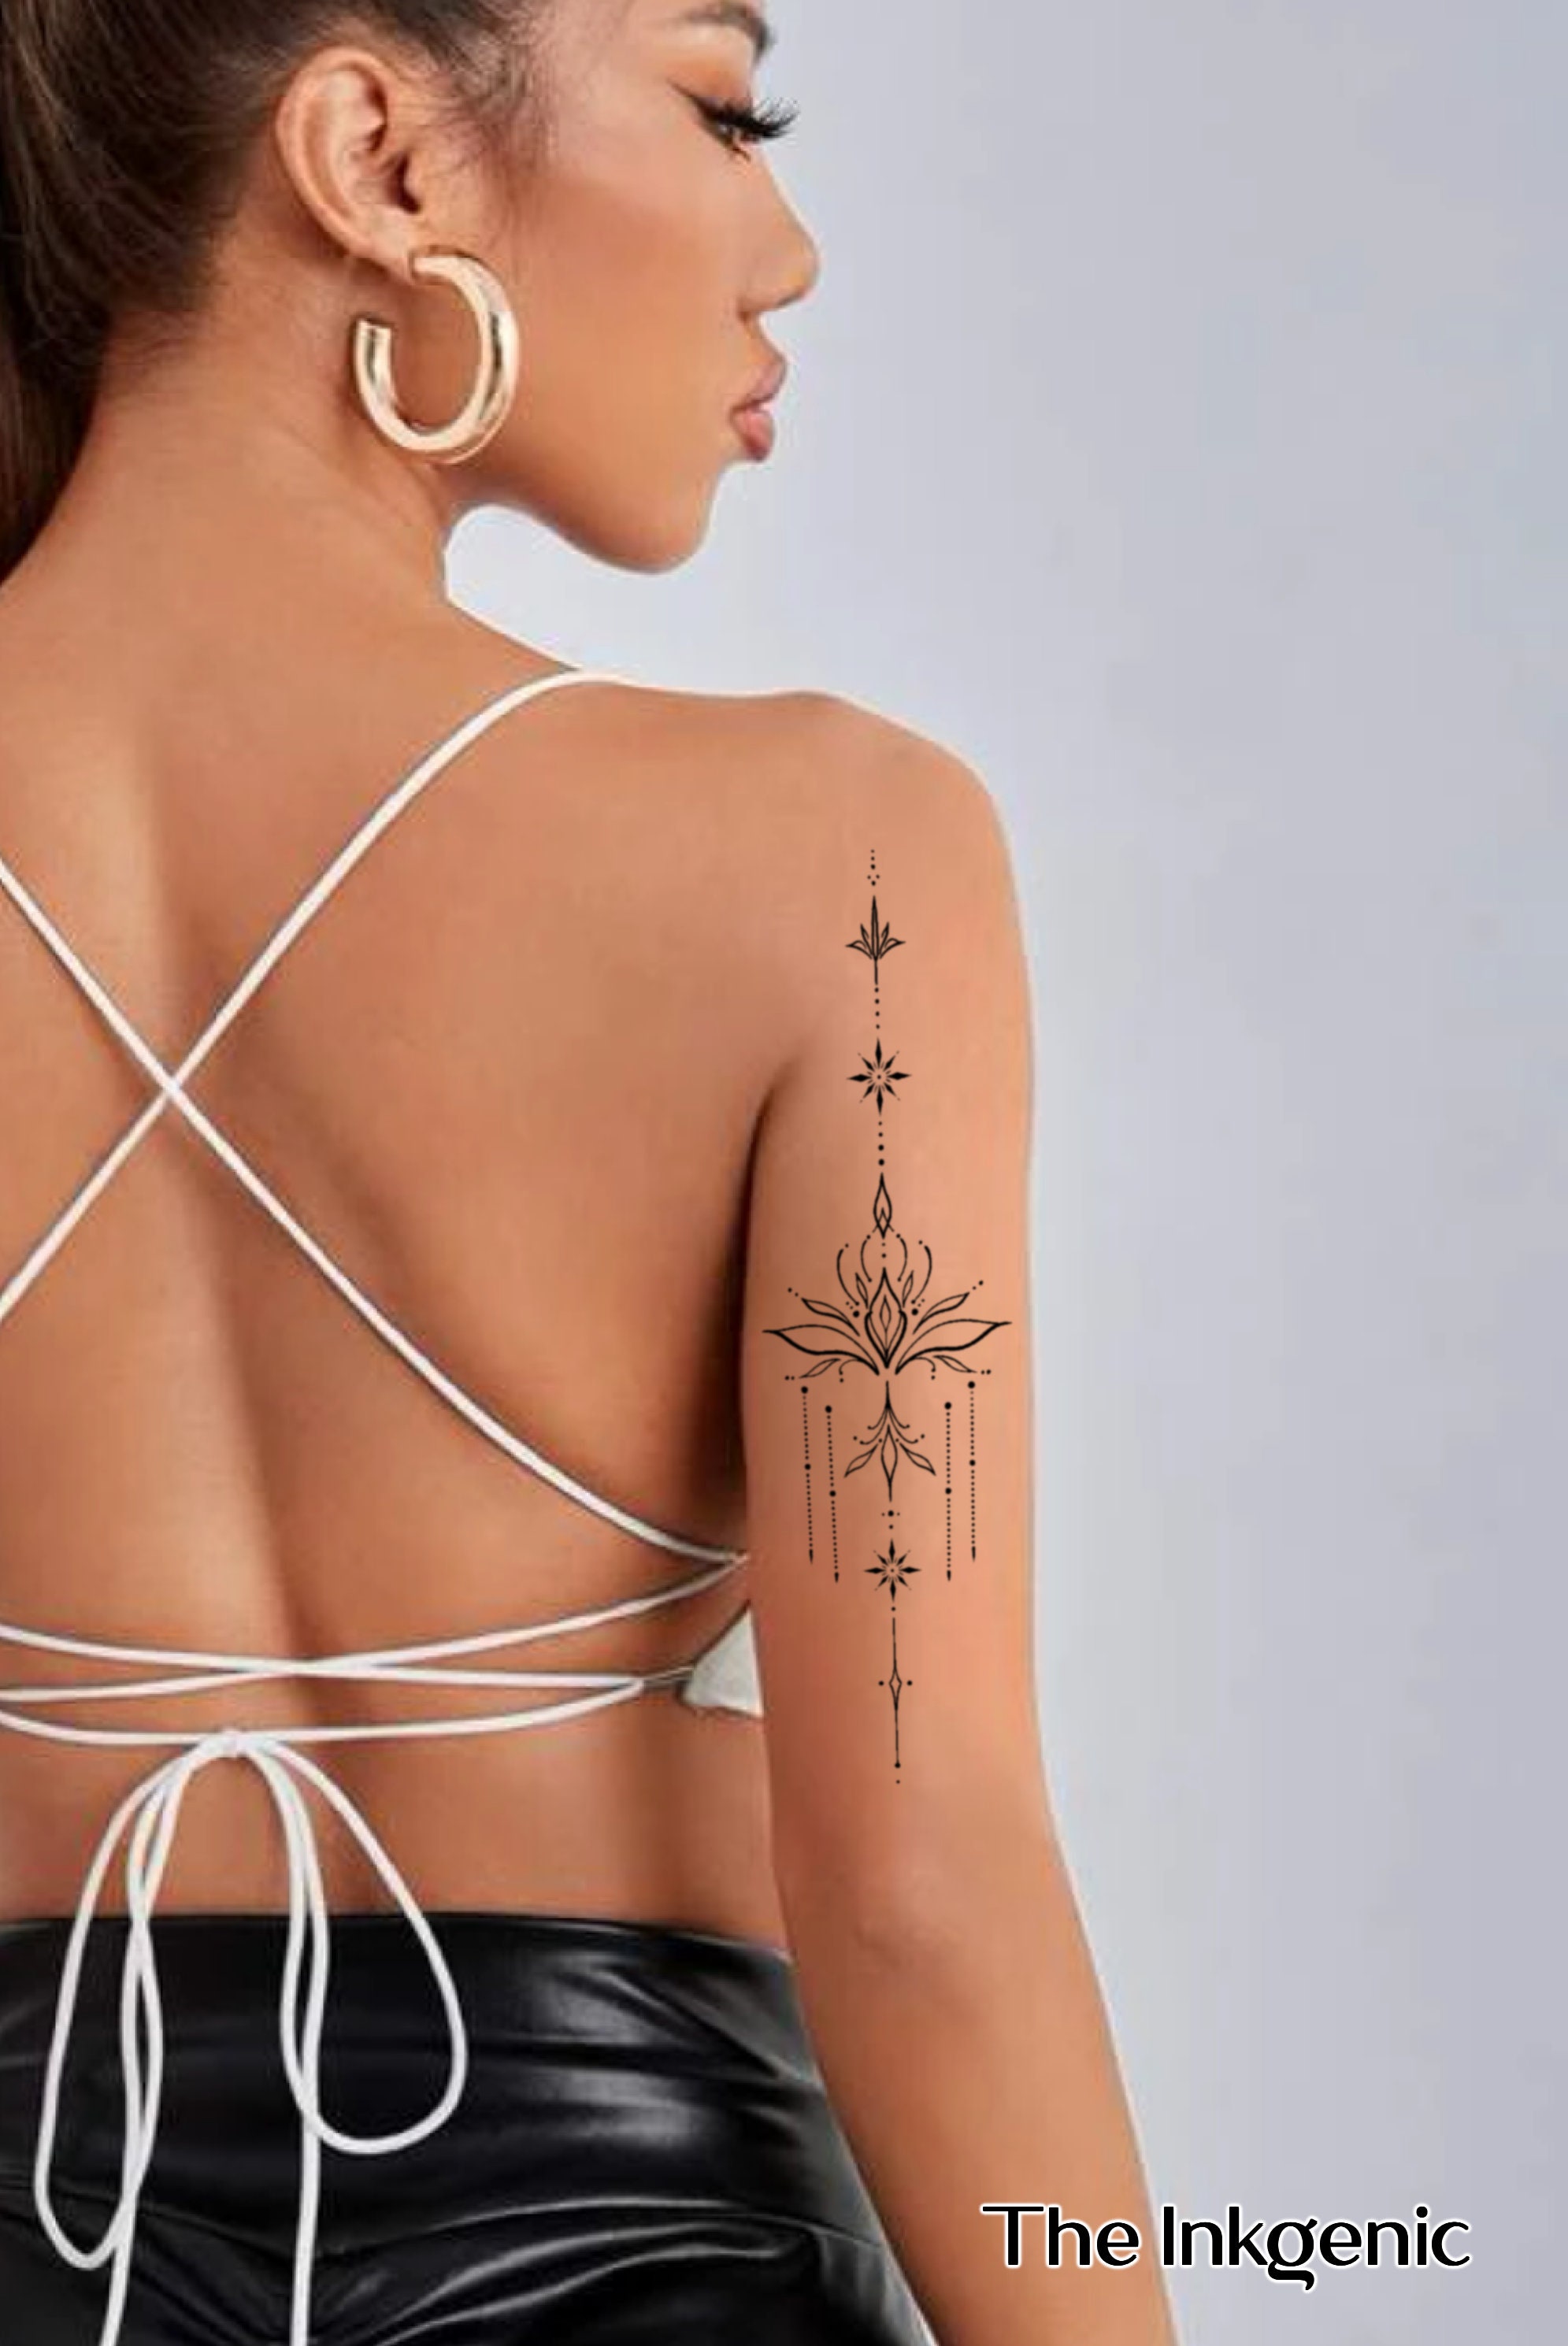 11 Flower Spine Tattoo Ideas That Will Blow Your Mind  alexie